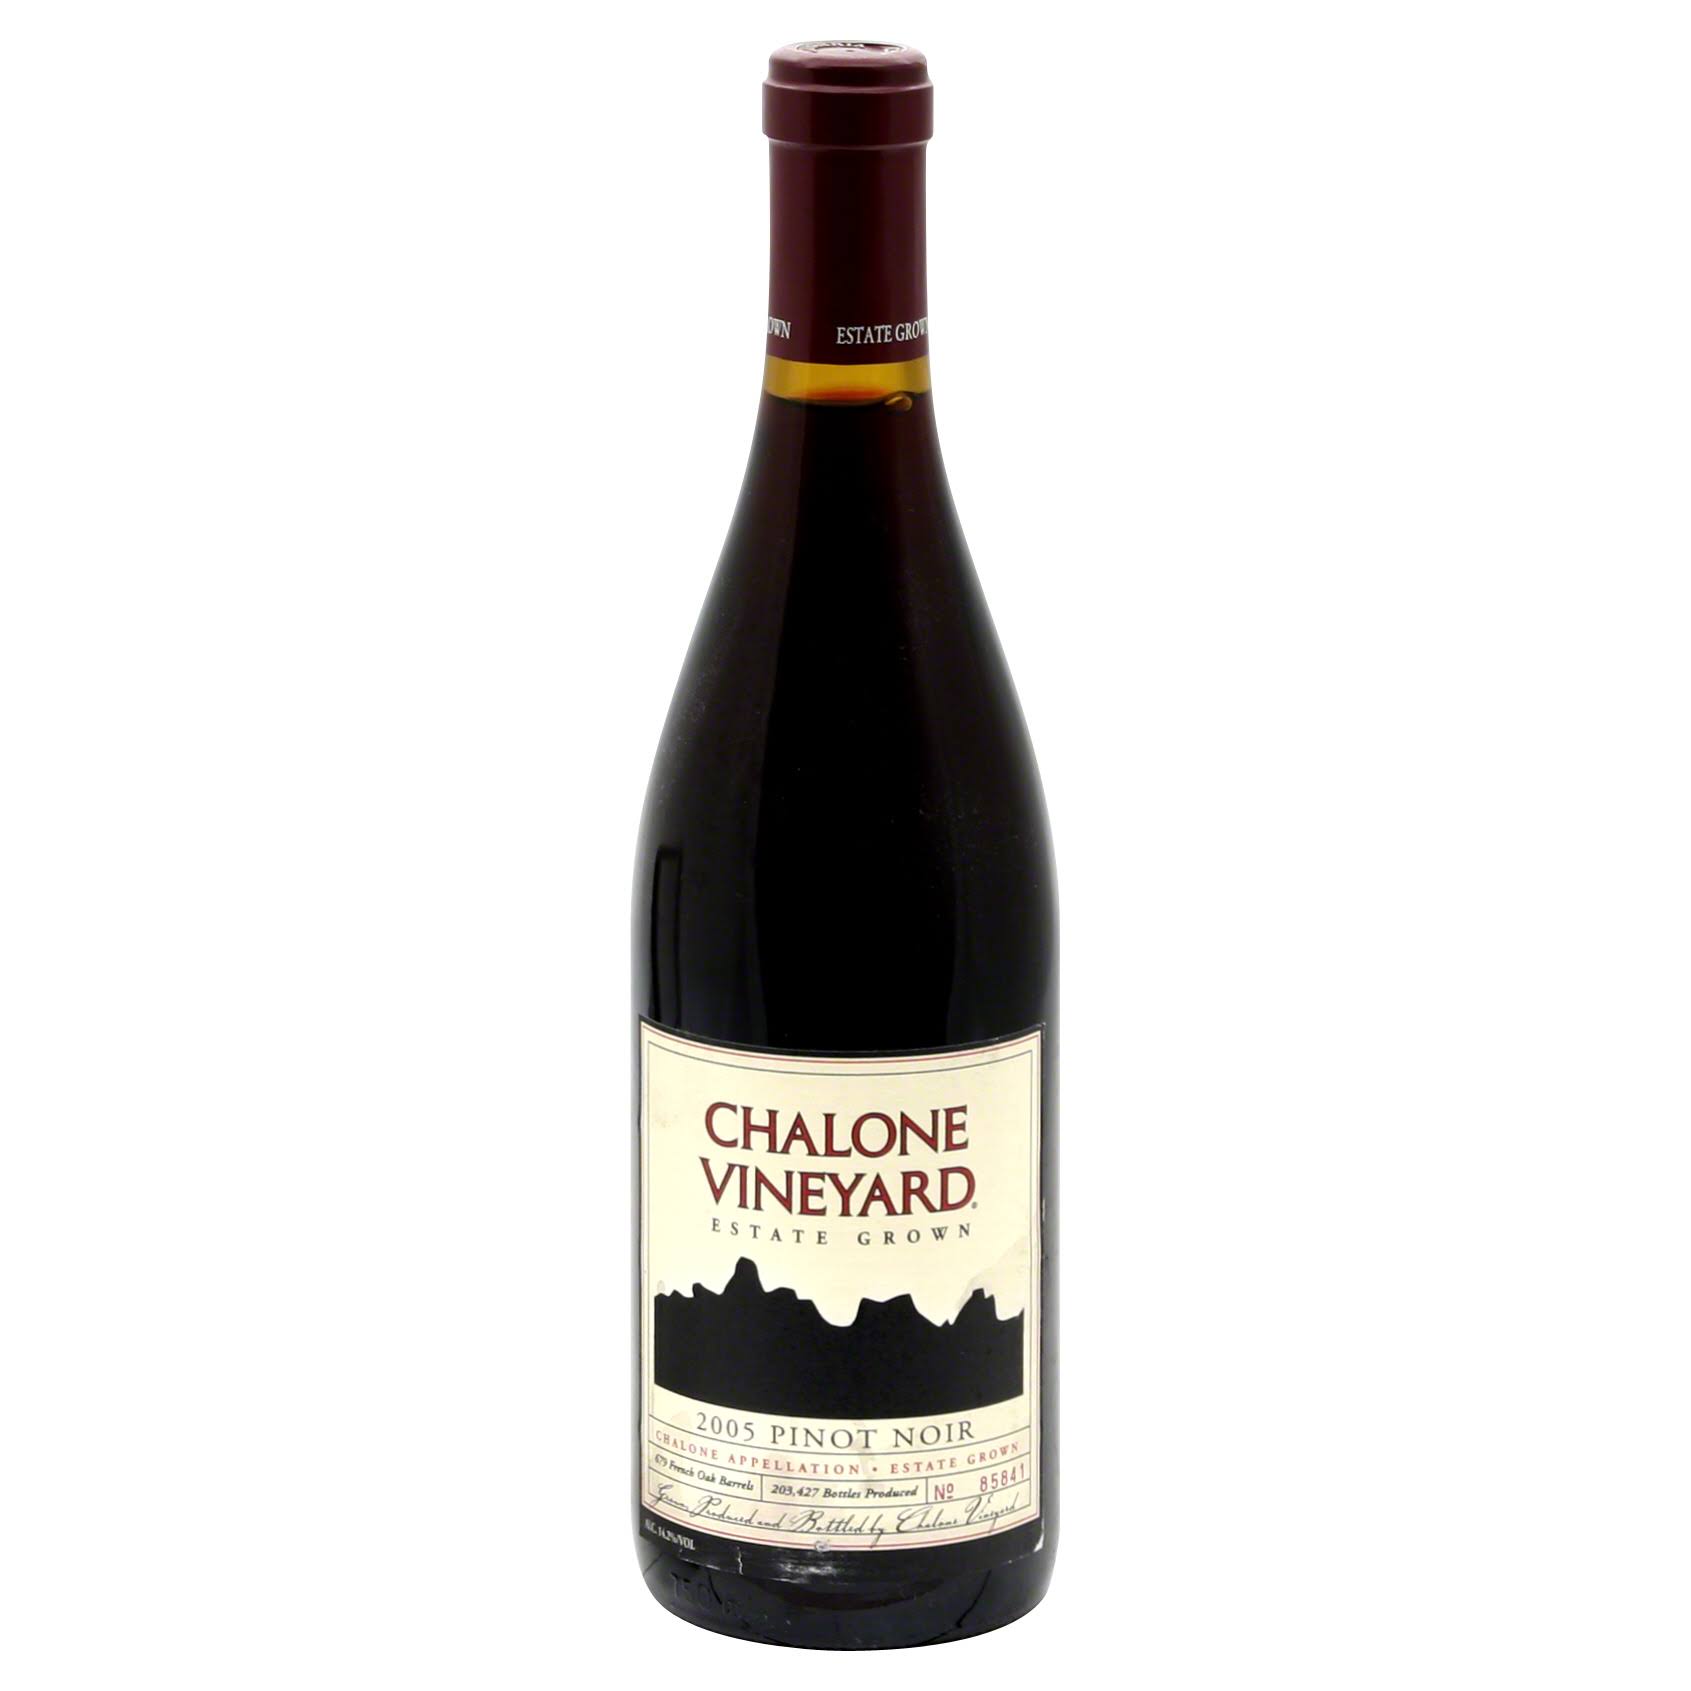 Chalone Vineyard Pinot Noir, Chalone Appellation, 2005 - 750 ml